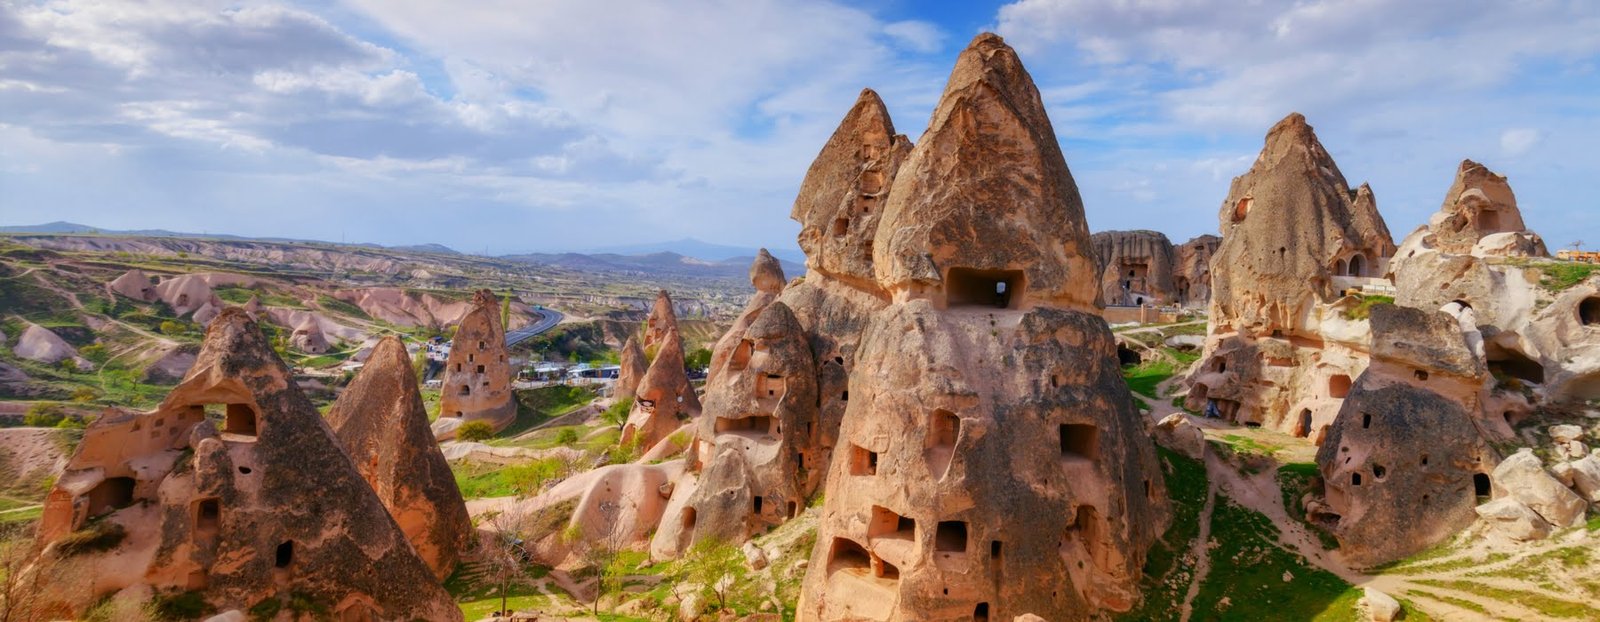 5 Days Turkey Tour to Istanbul and Cappadocia